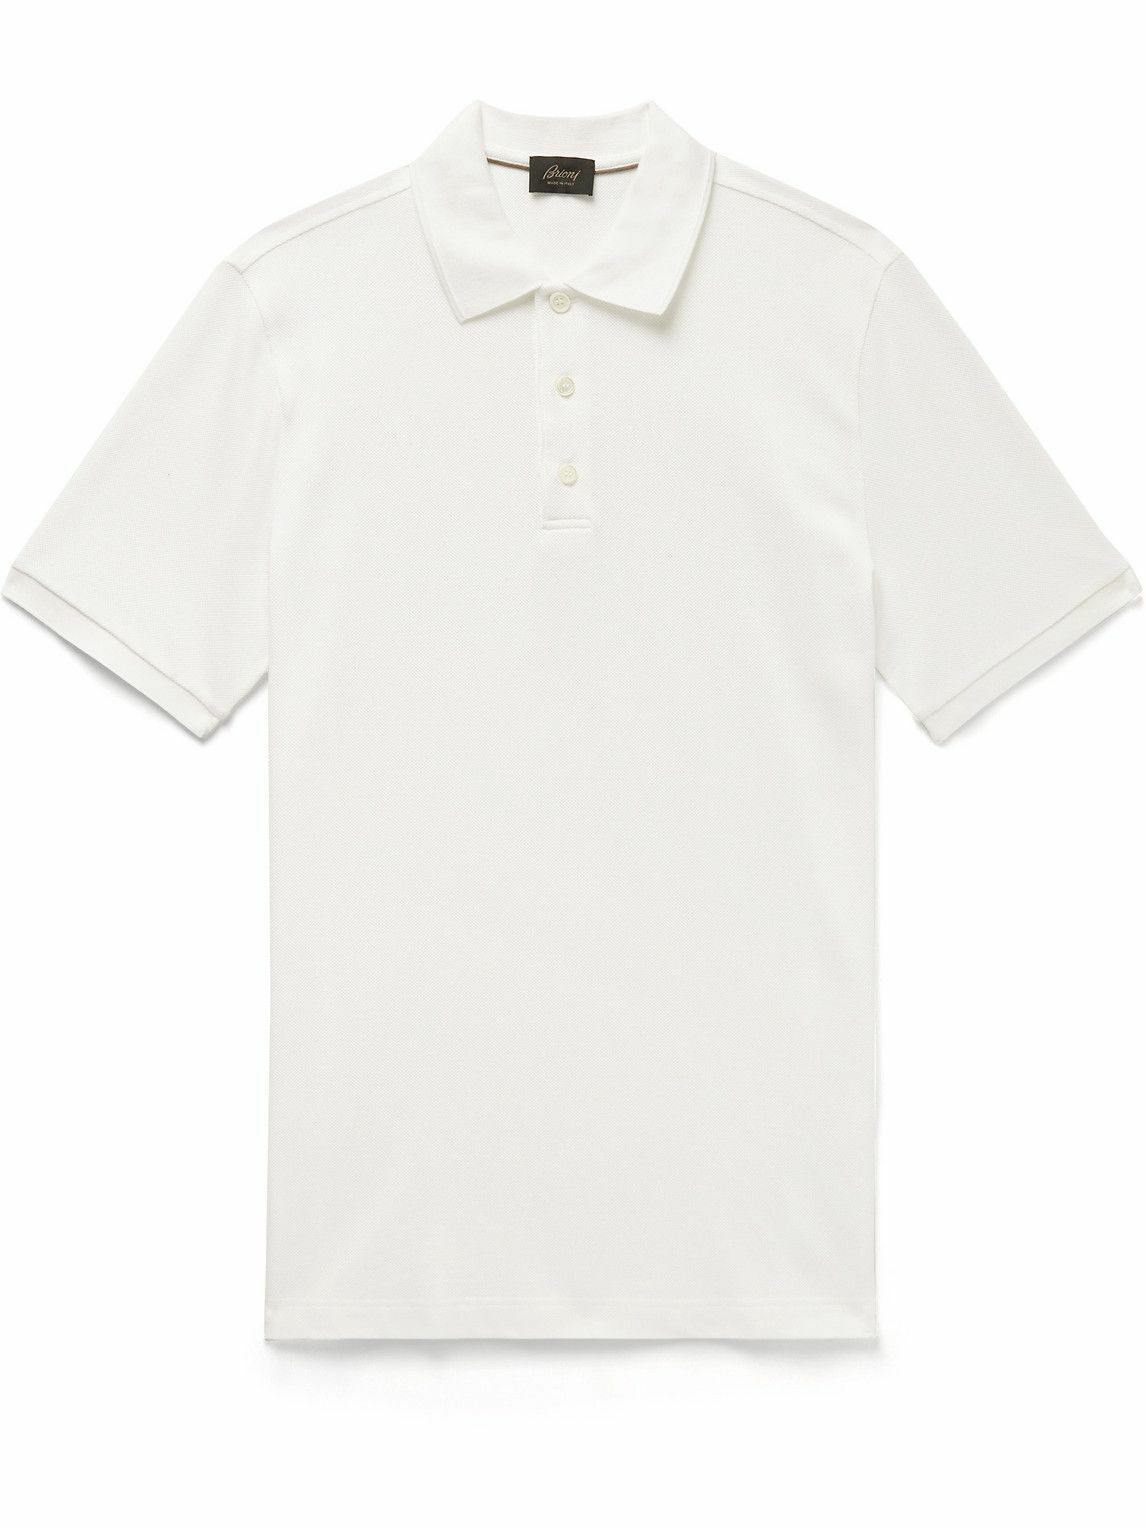 Brioni - Cotton-Piqué Polo Shirt - White Brioni